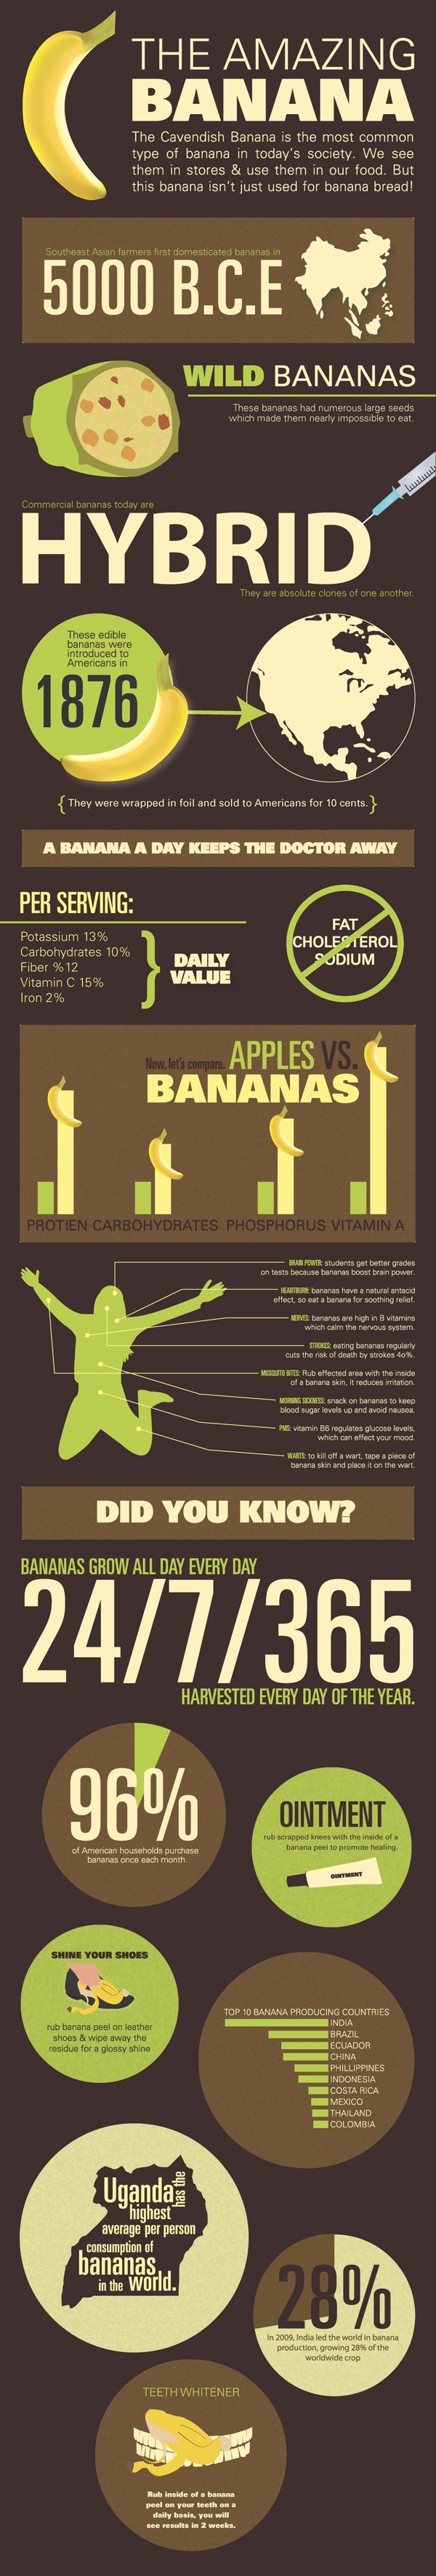 The-Benefits-of-Bananas